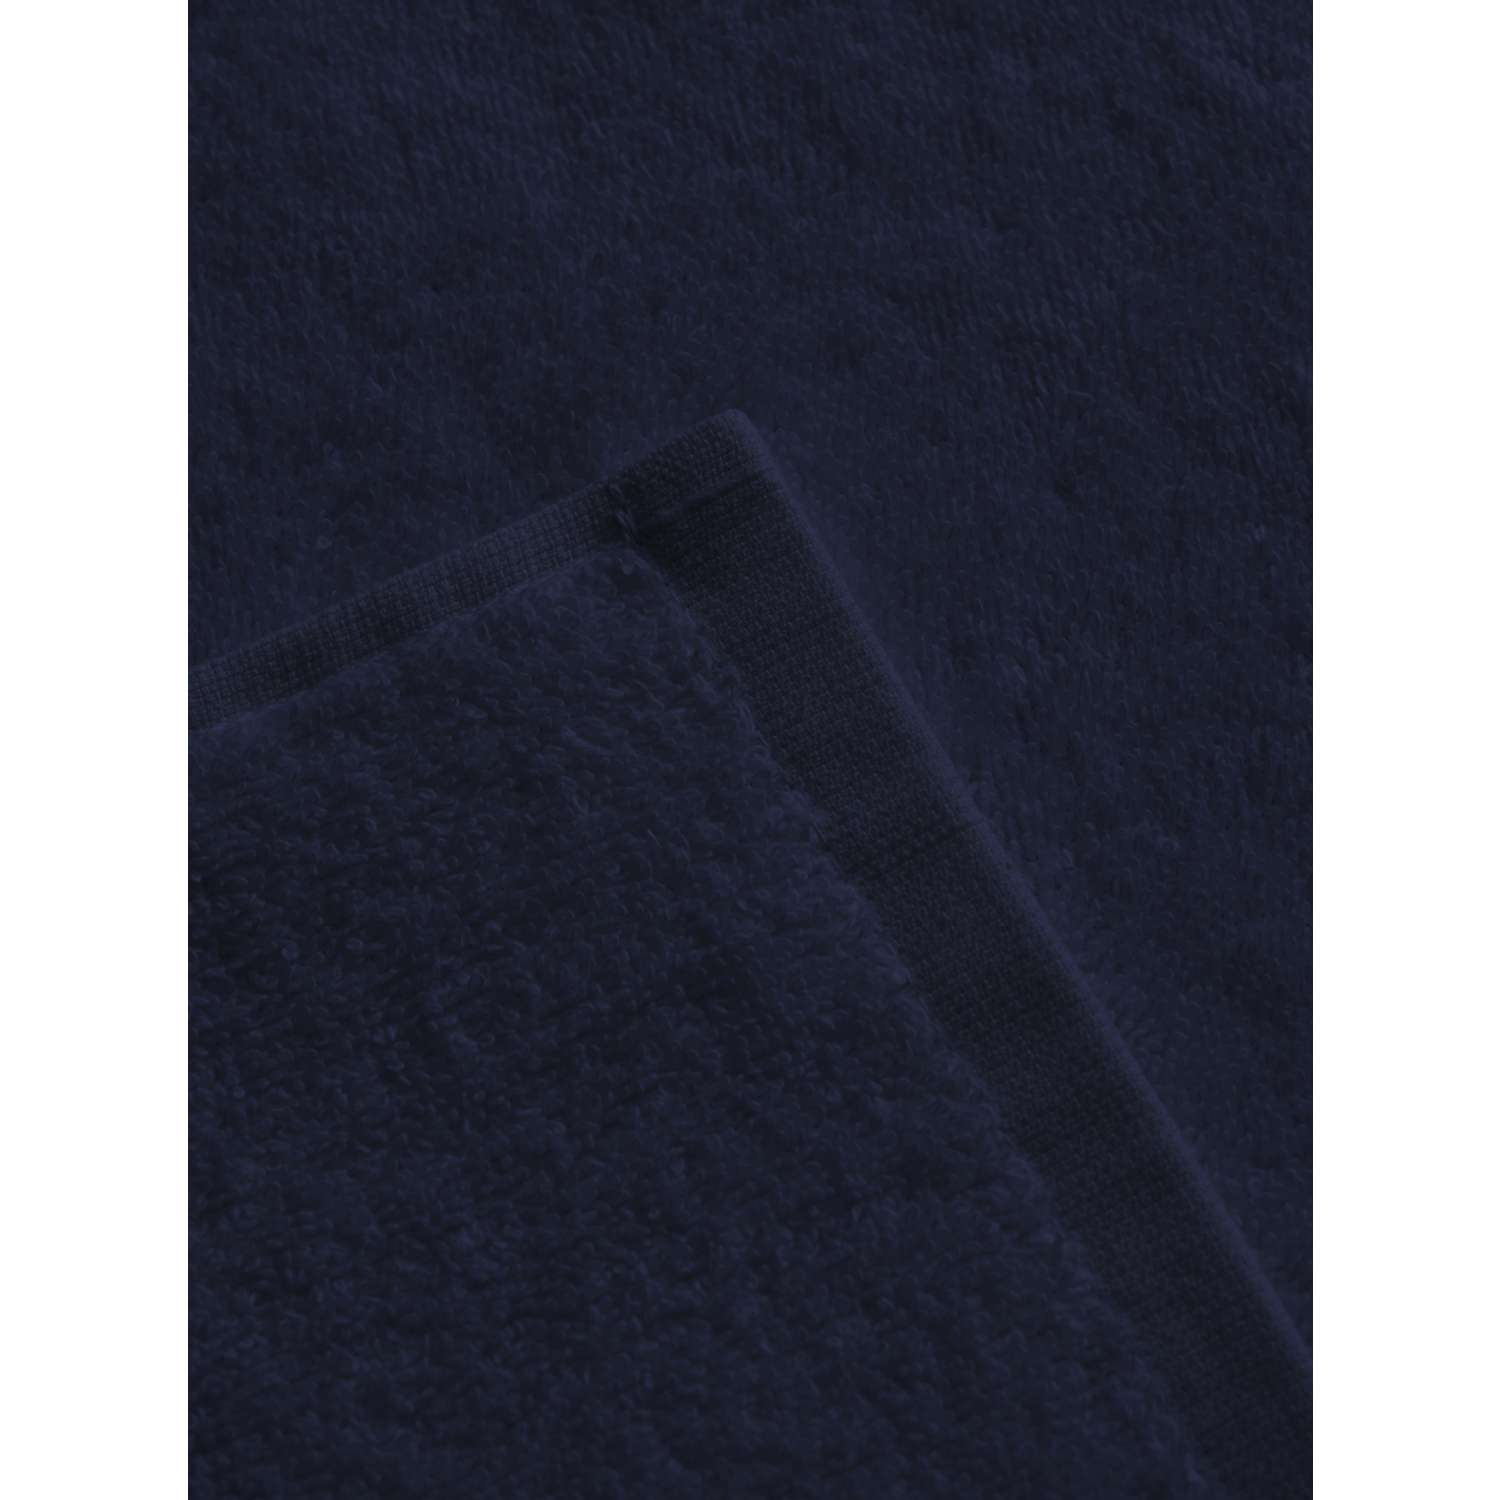 Полотенце Frutto Rosso Банное махровое синий 70*140 - фото 10